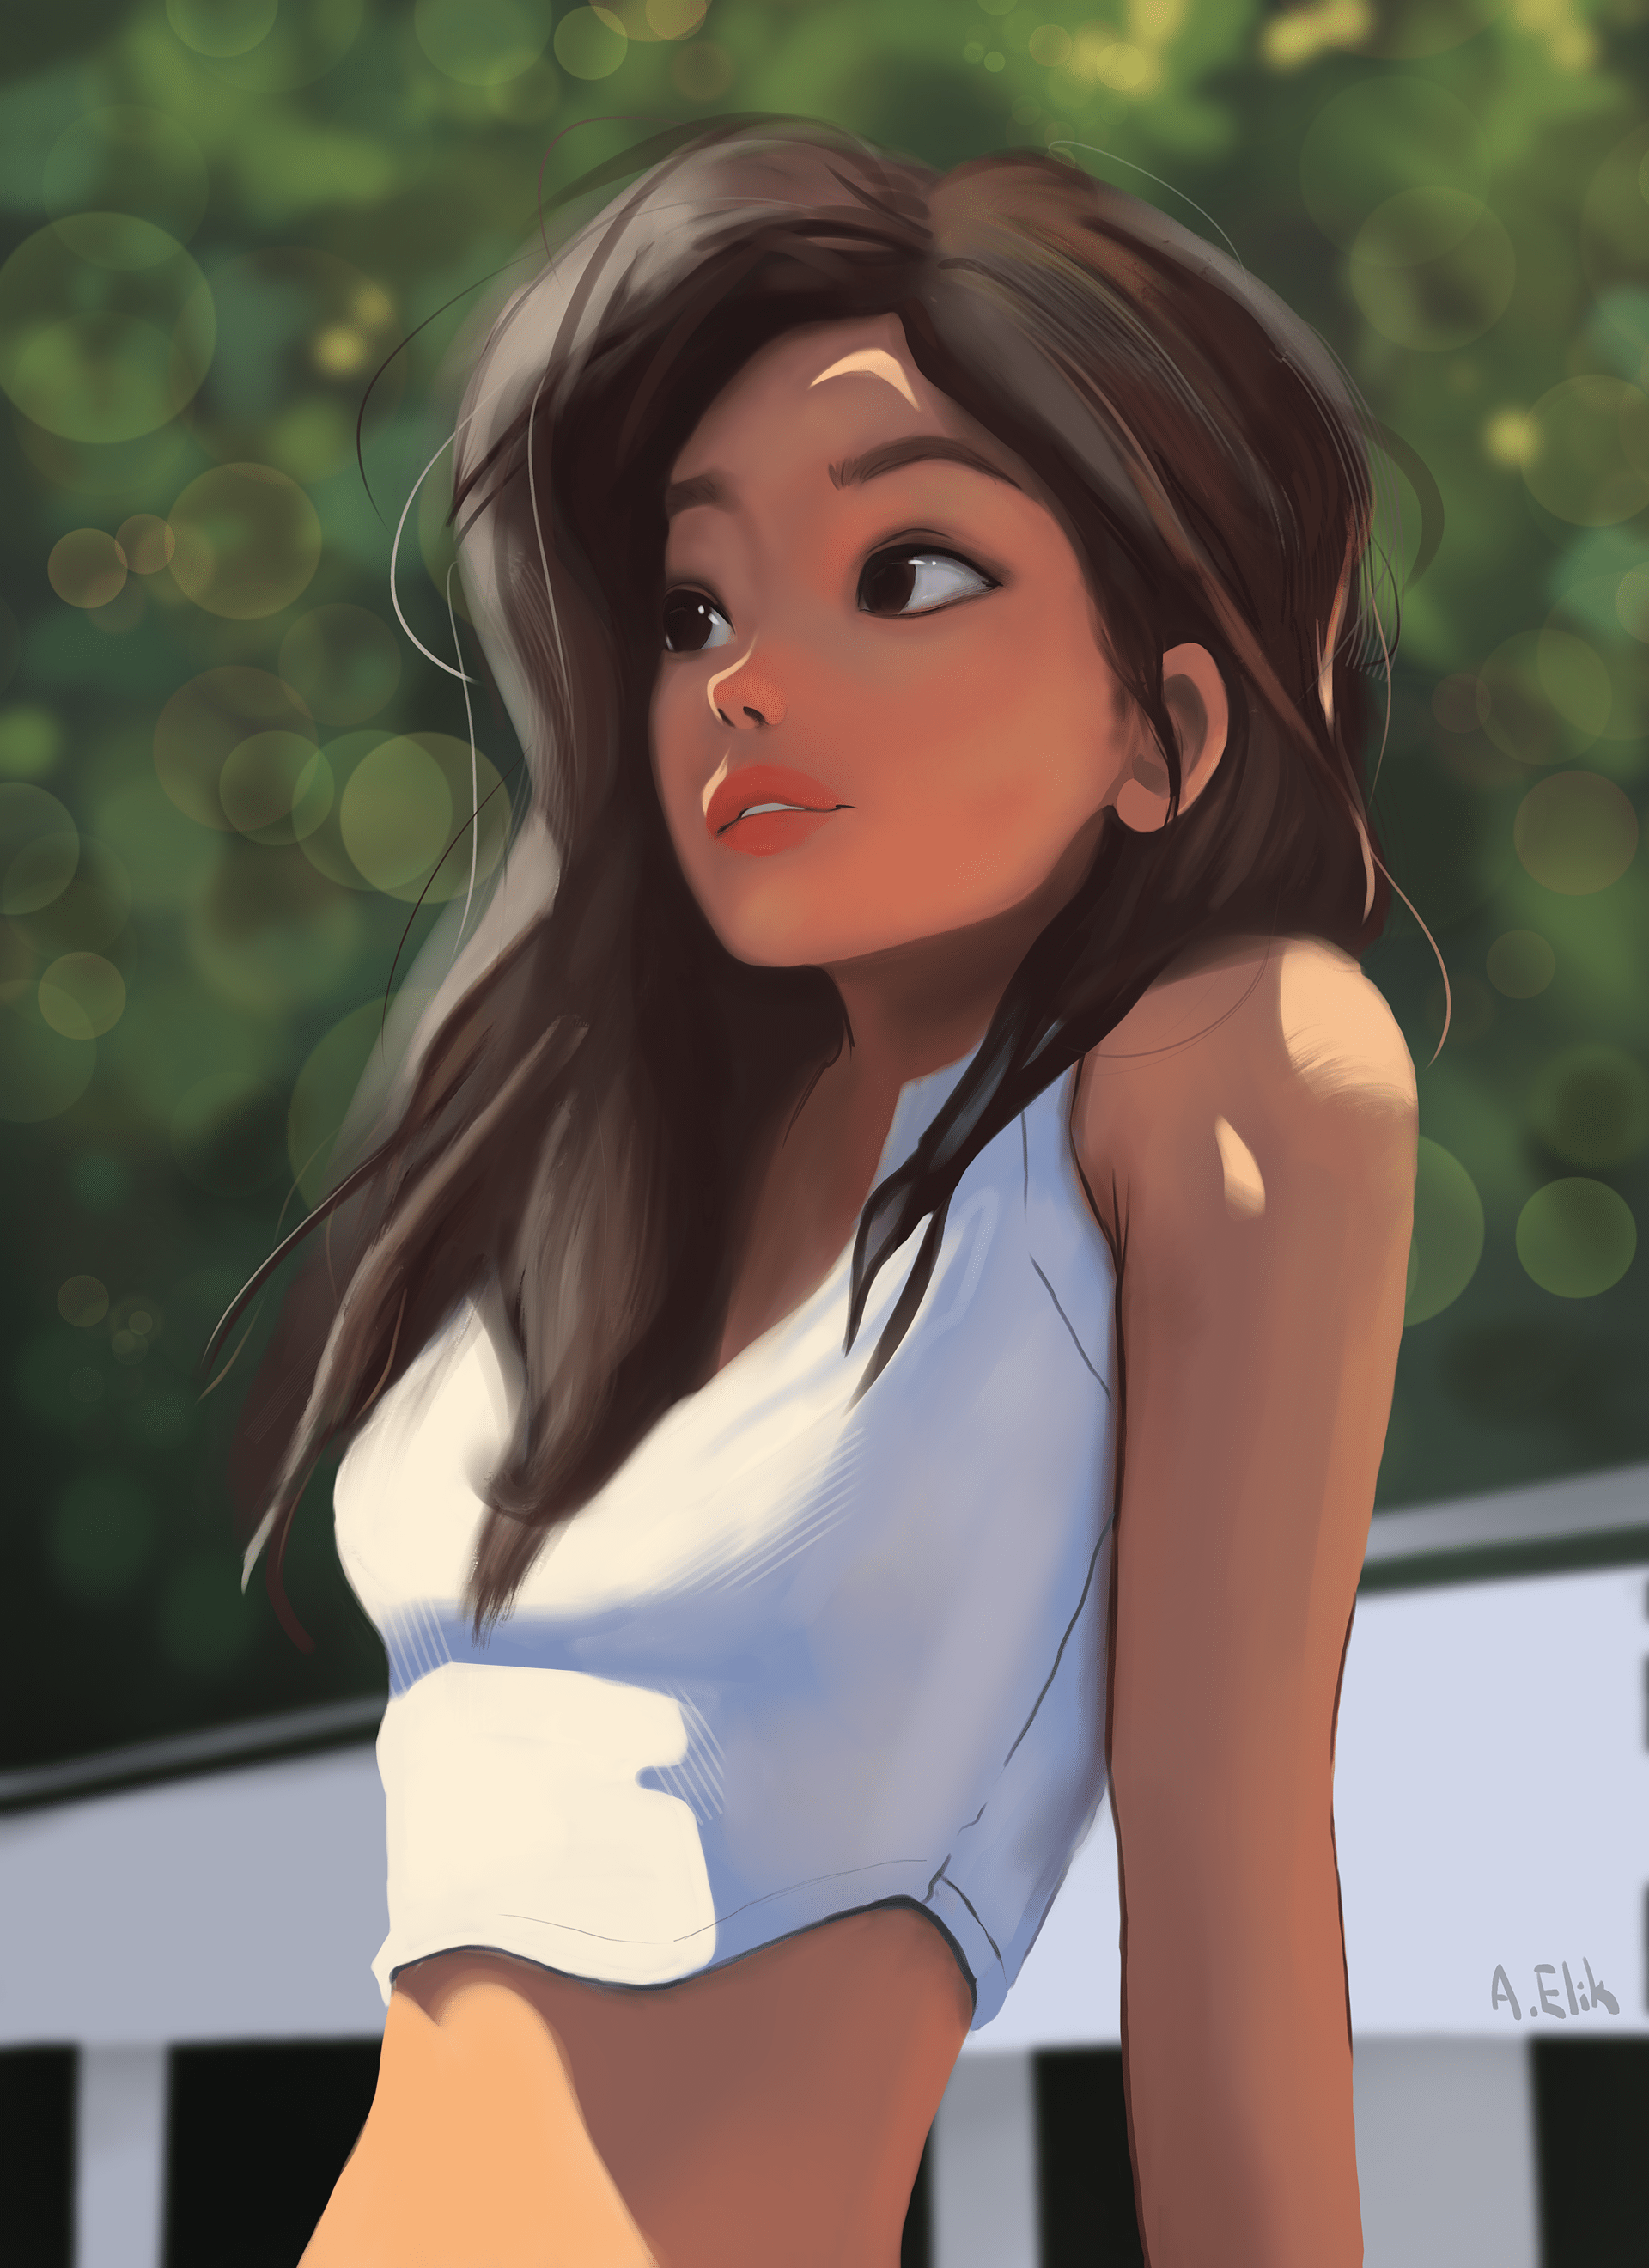 anime girl drawing summer setting beautiful girl | Behance